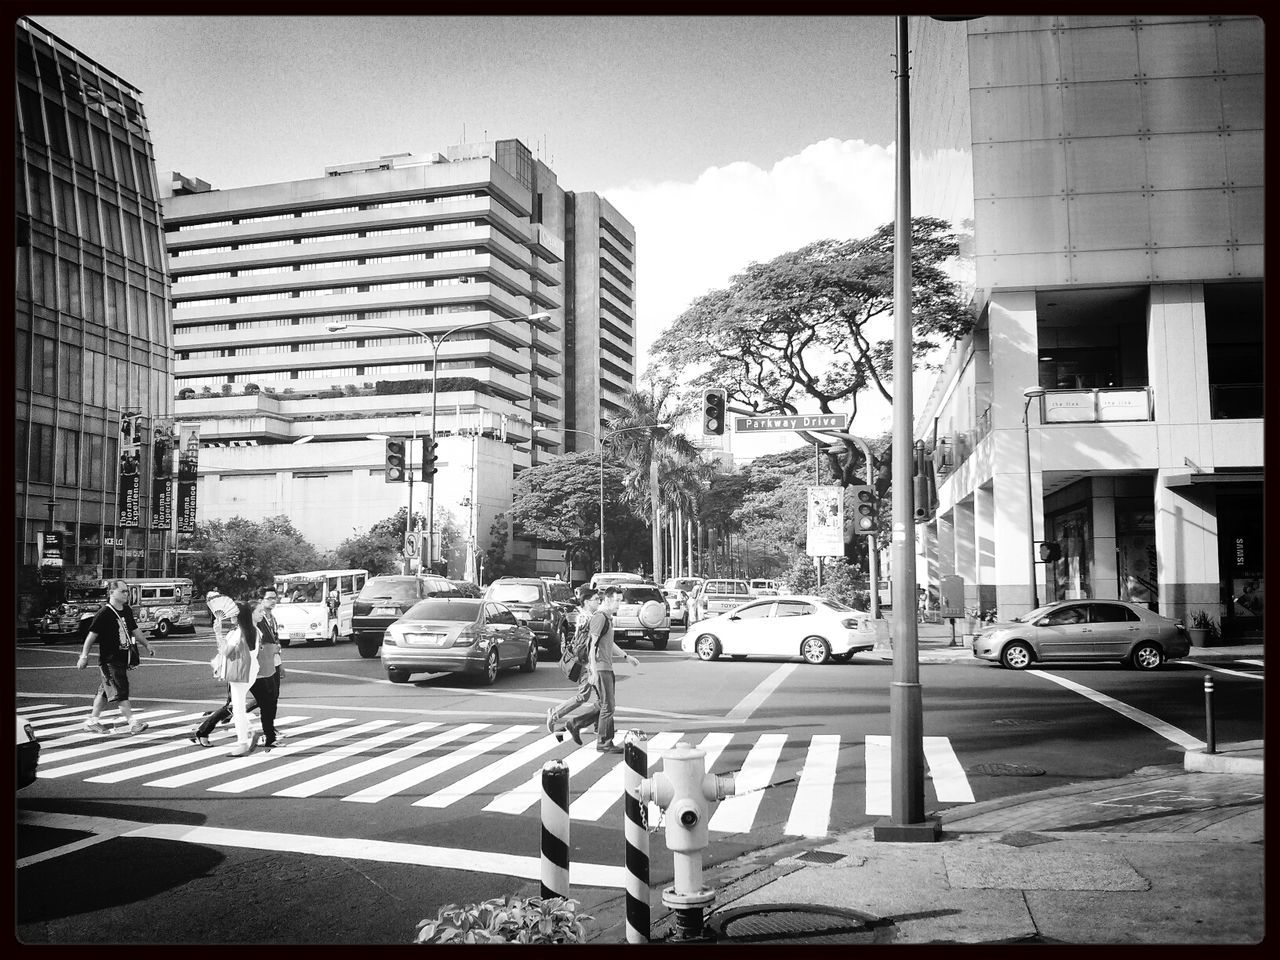 People walking on zebra crossing by buildings in city